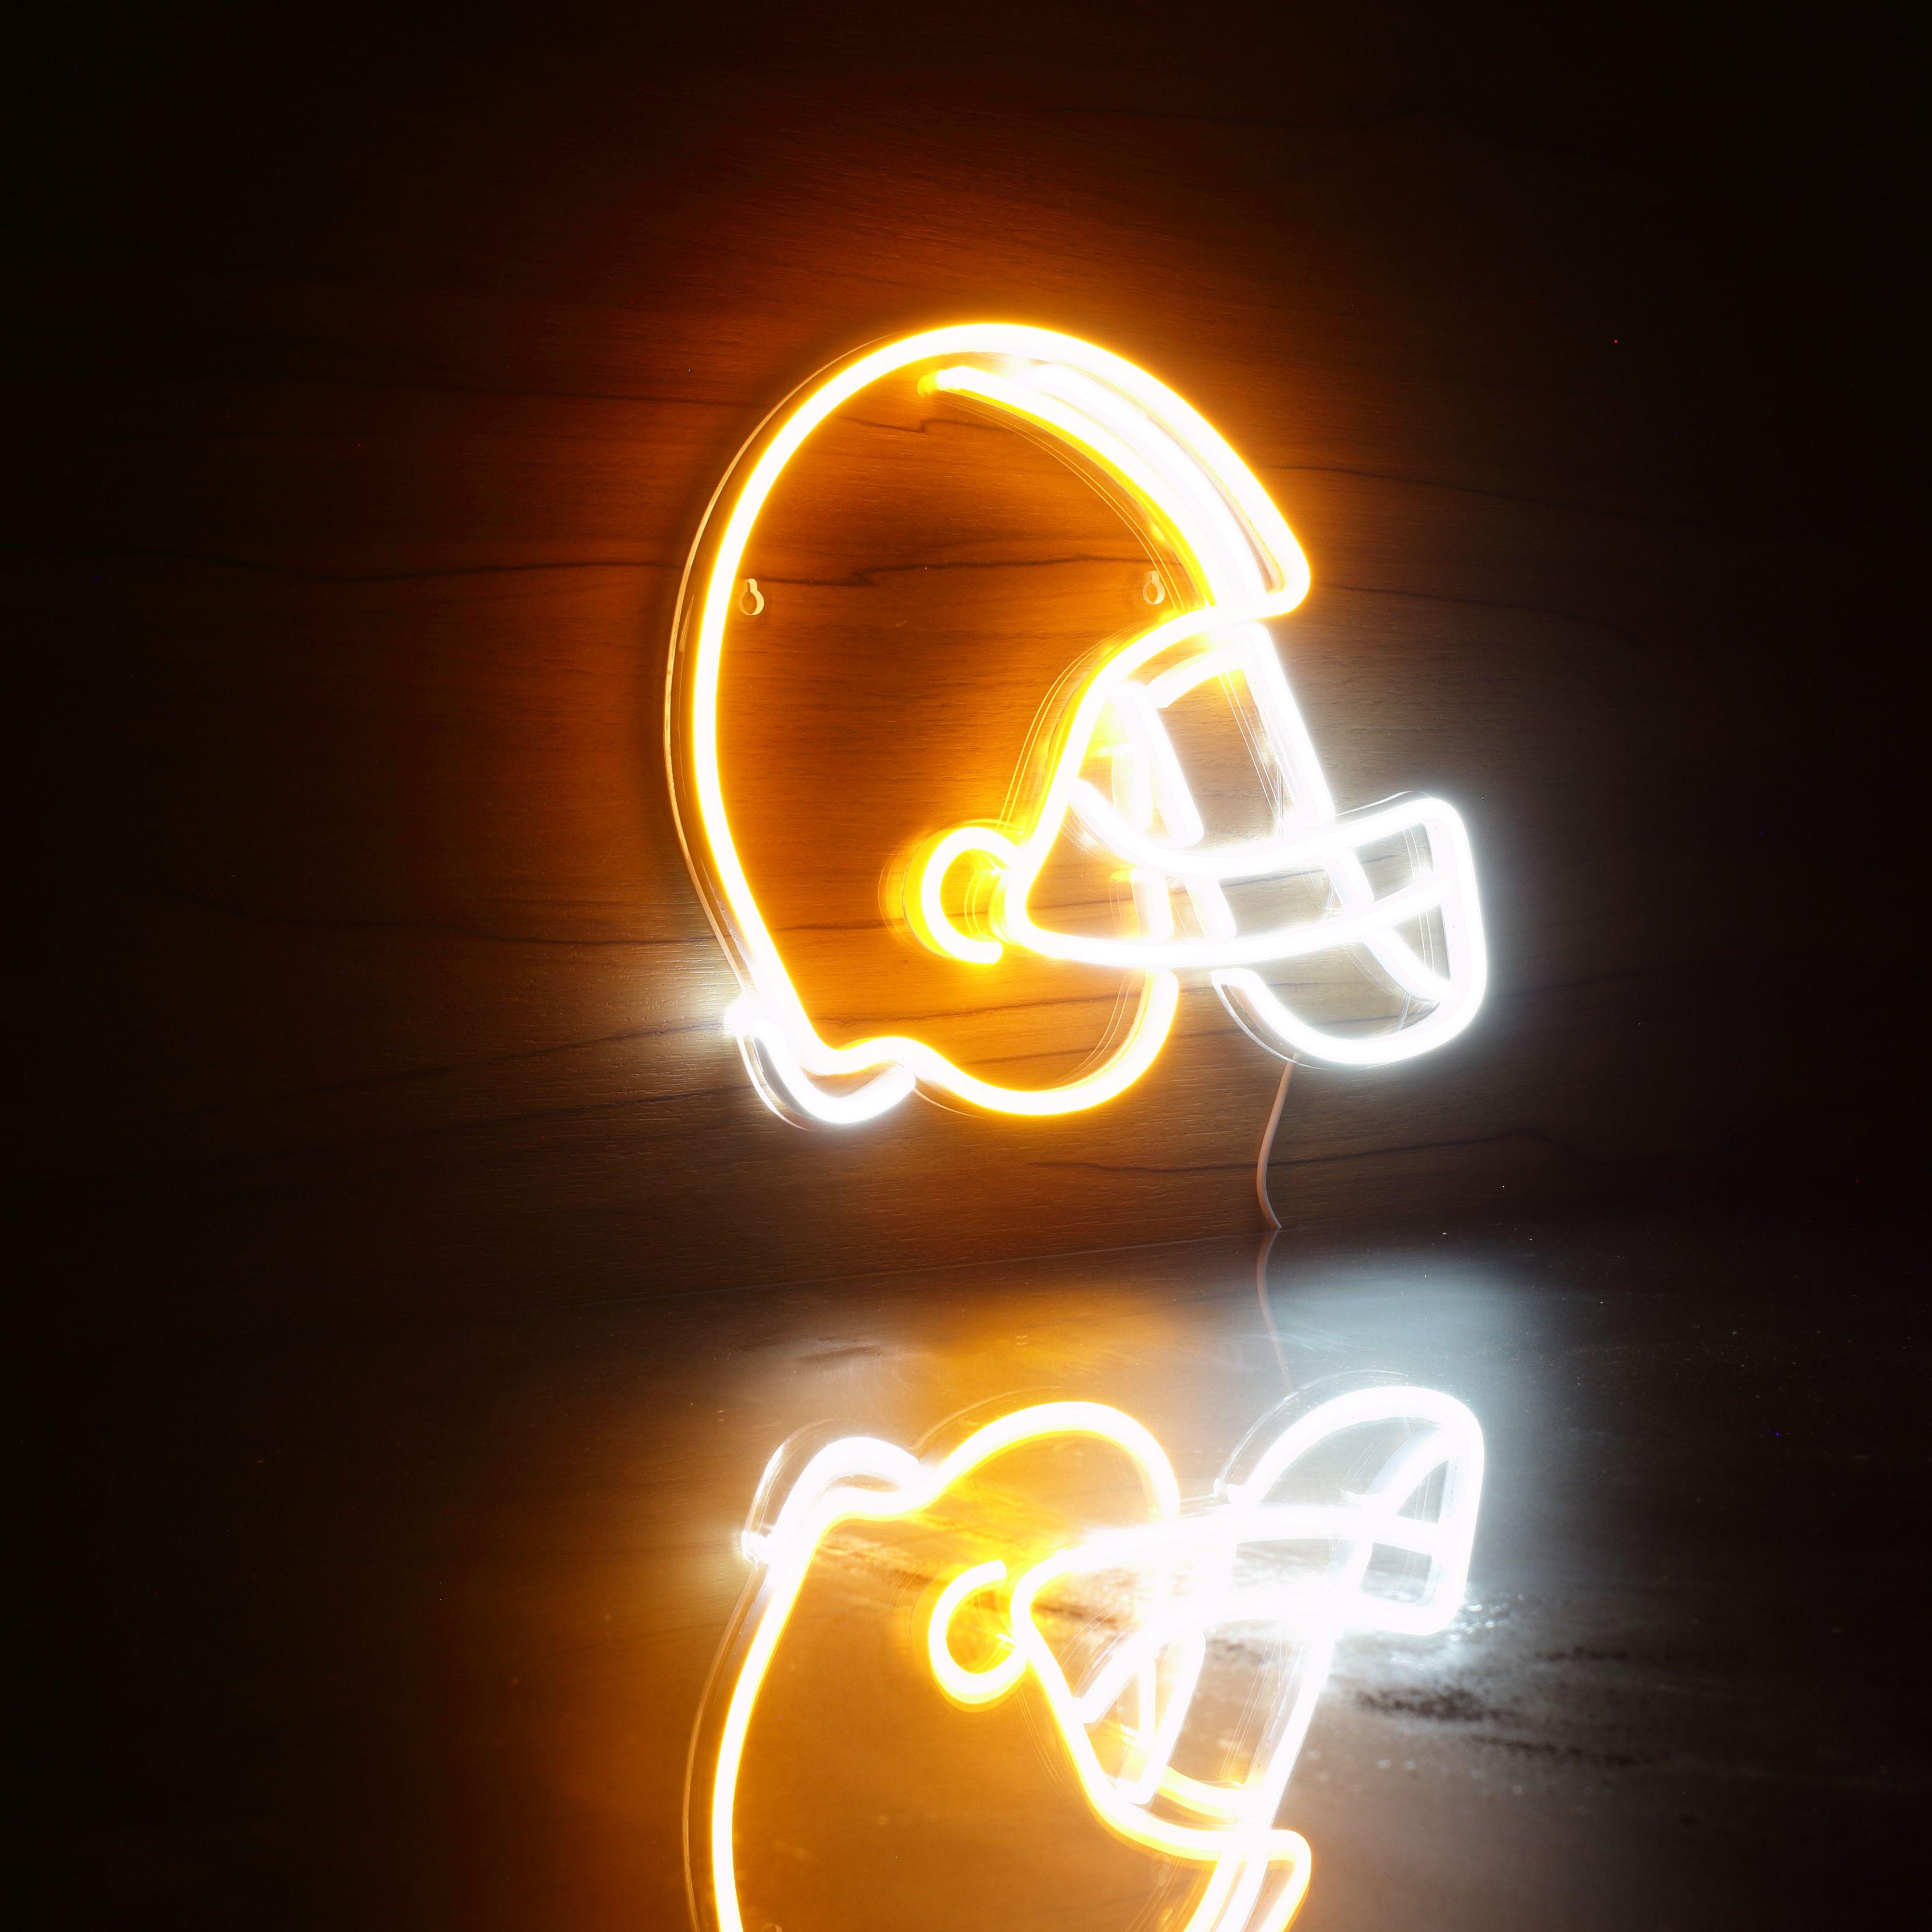 Cleveland Browns Neon-Like Flex LED Sign Dual Color - ProLedSign